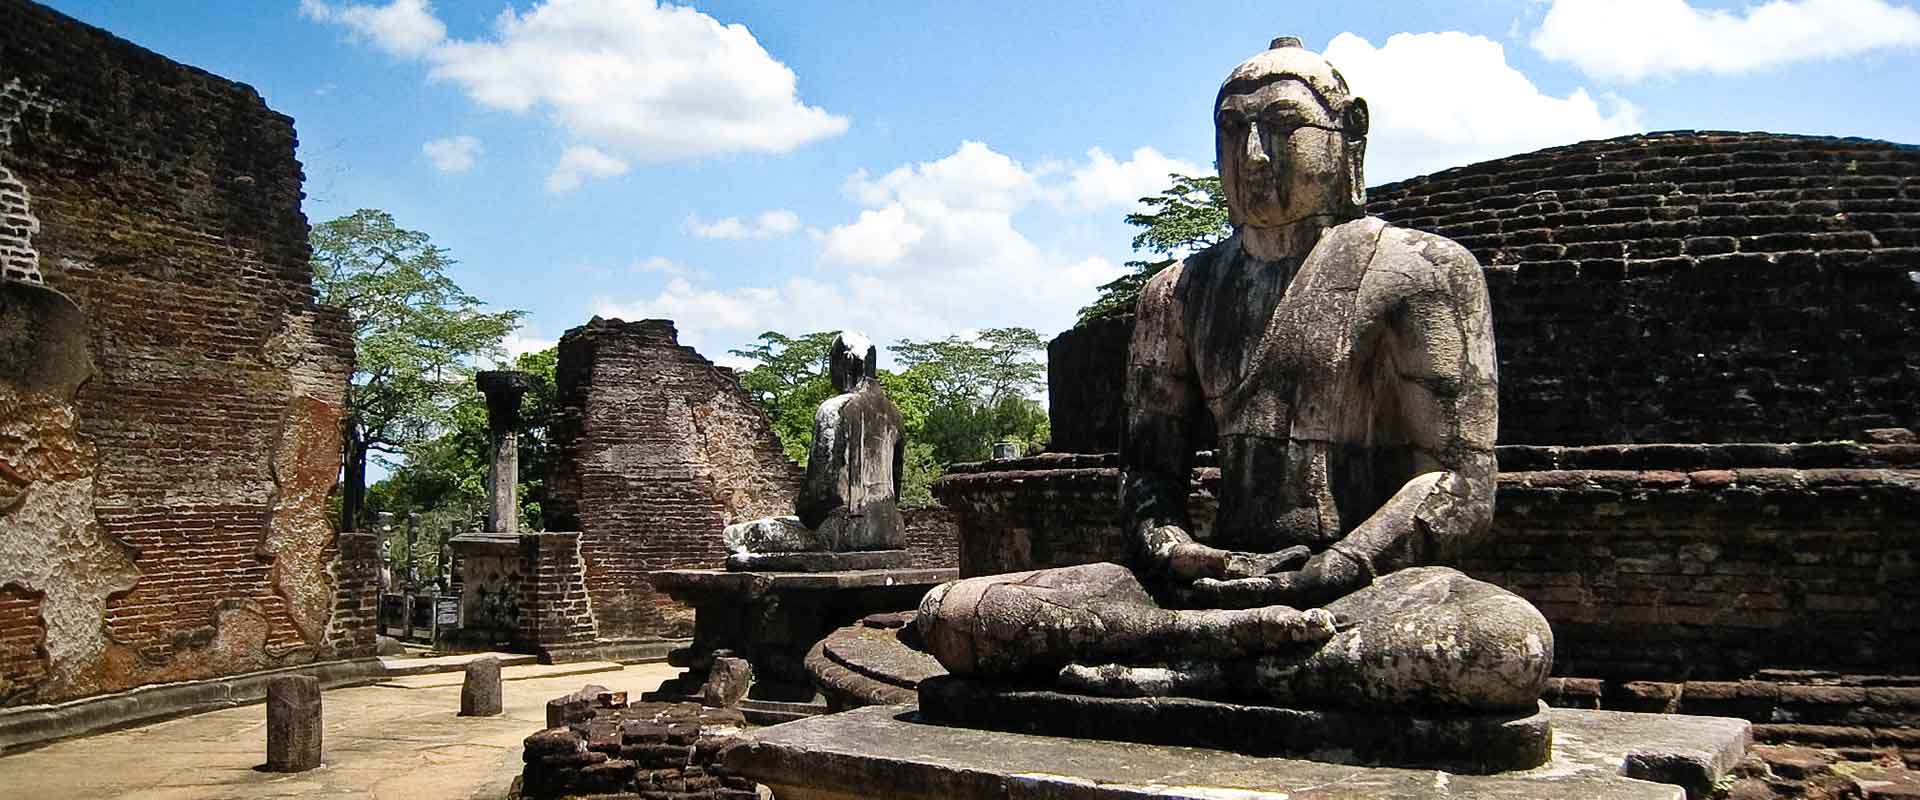 Buddha statue in ancient Polonnaruwa city on a sunny day